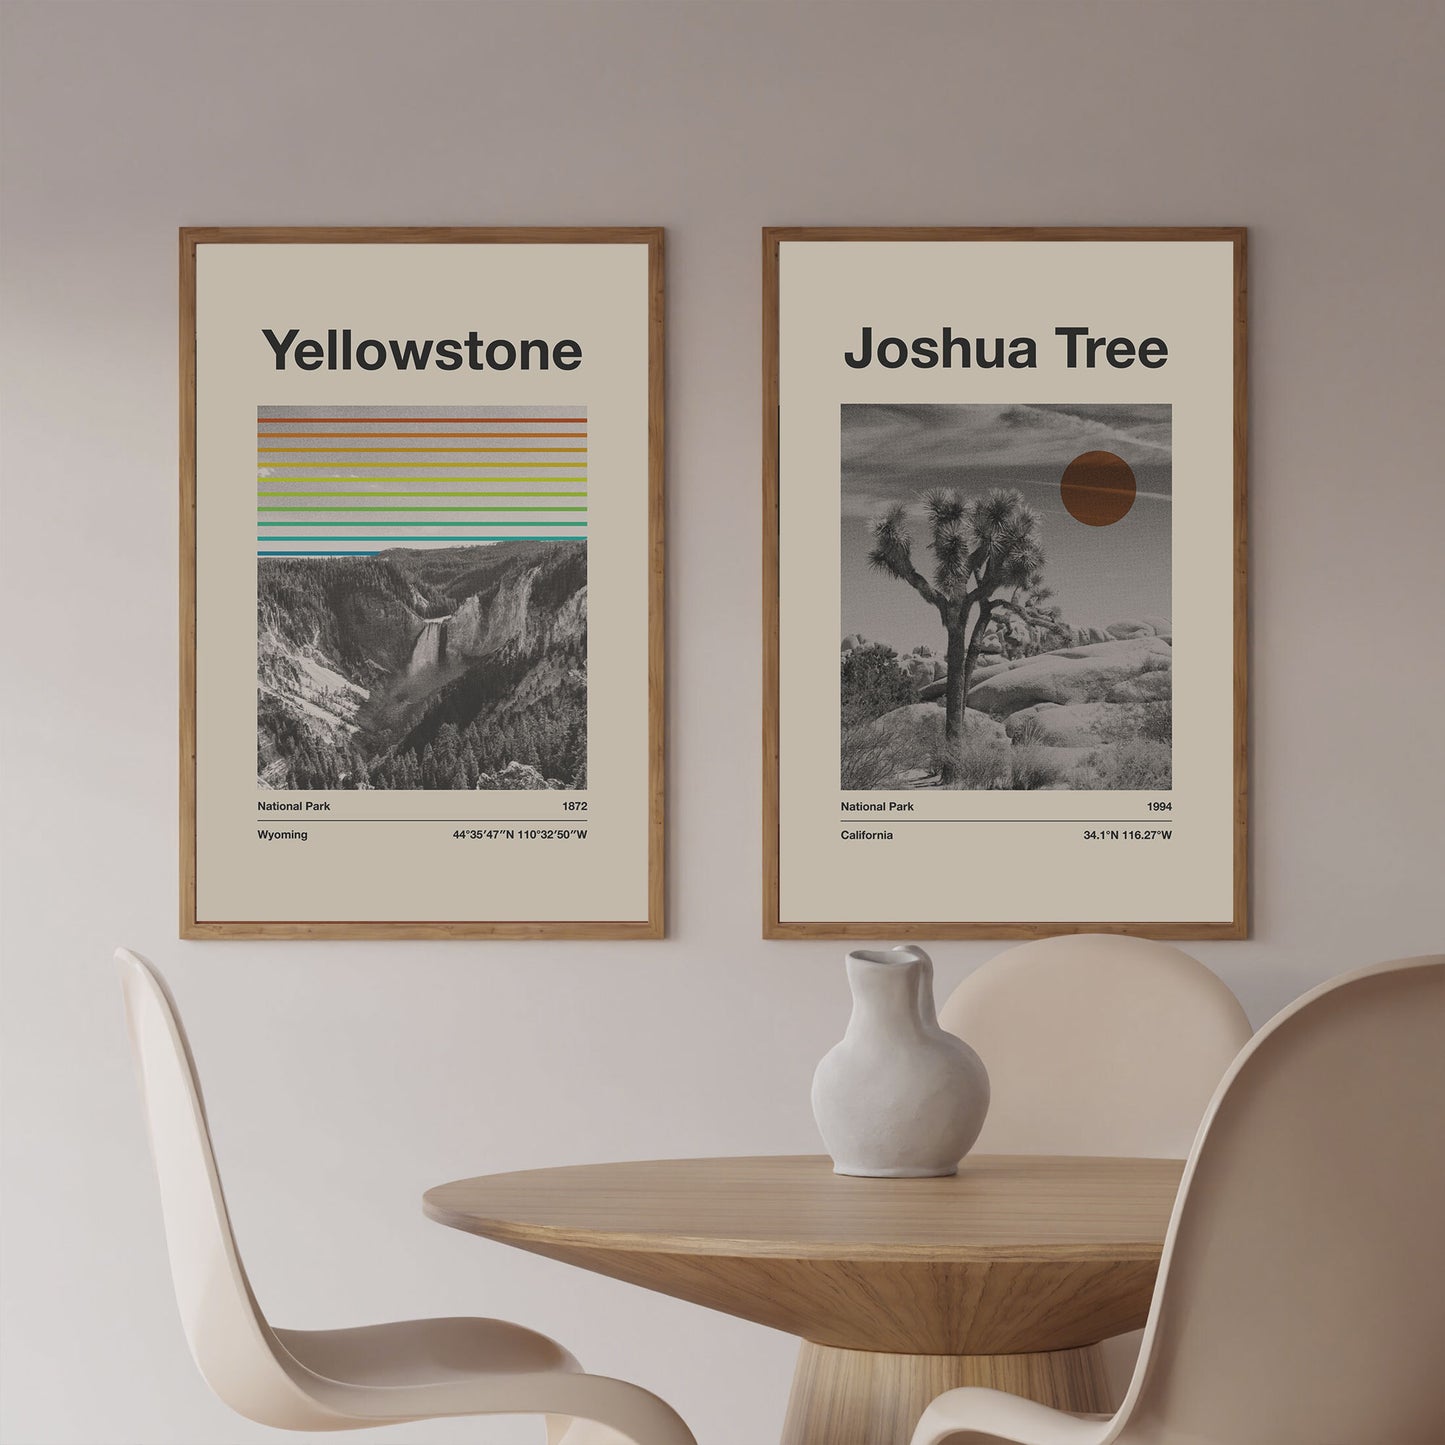 Yellowstone National Park - poster - national park prints, yellowstone